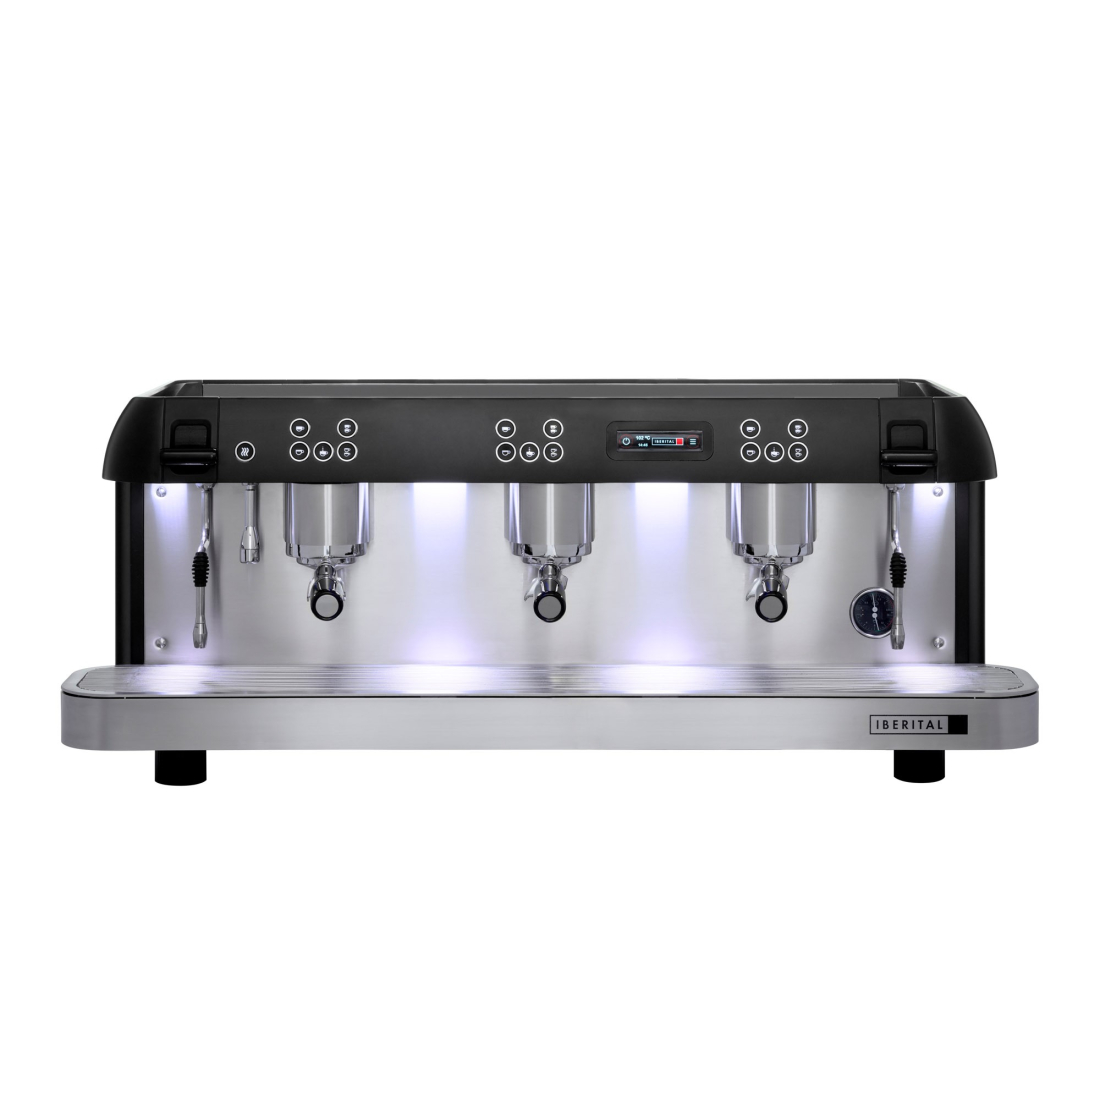 IBERITAL EXPRESSION PRO 3 Groups Espresso Machine - Dual Boiler